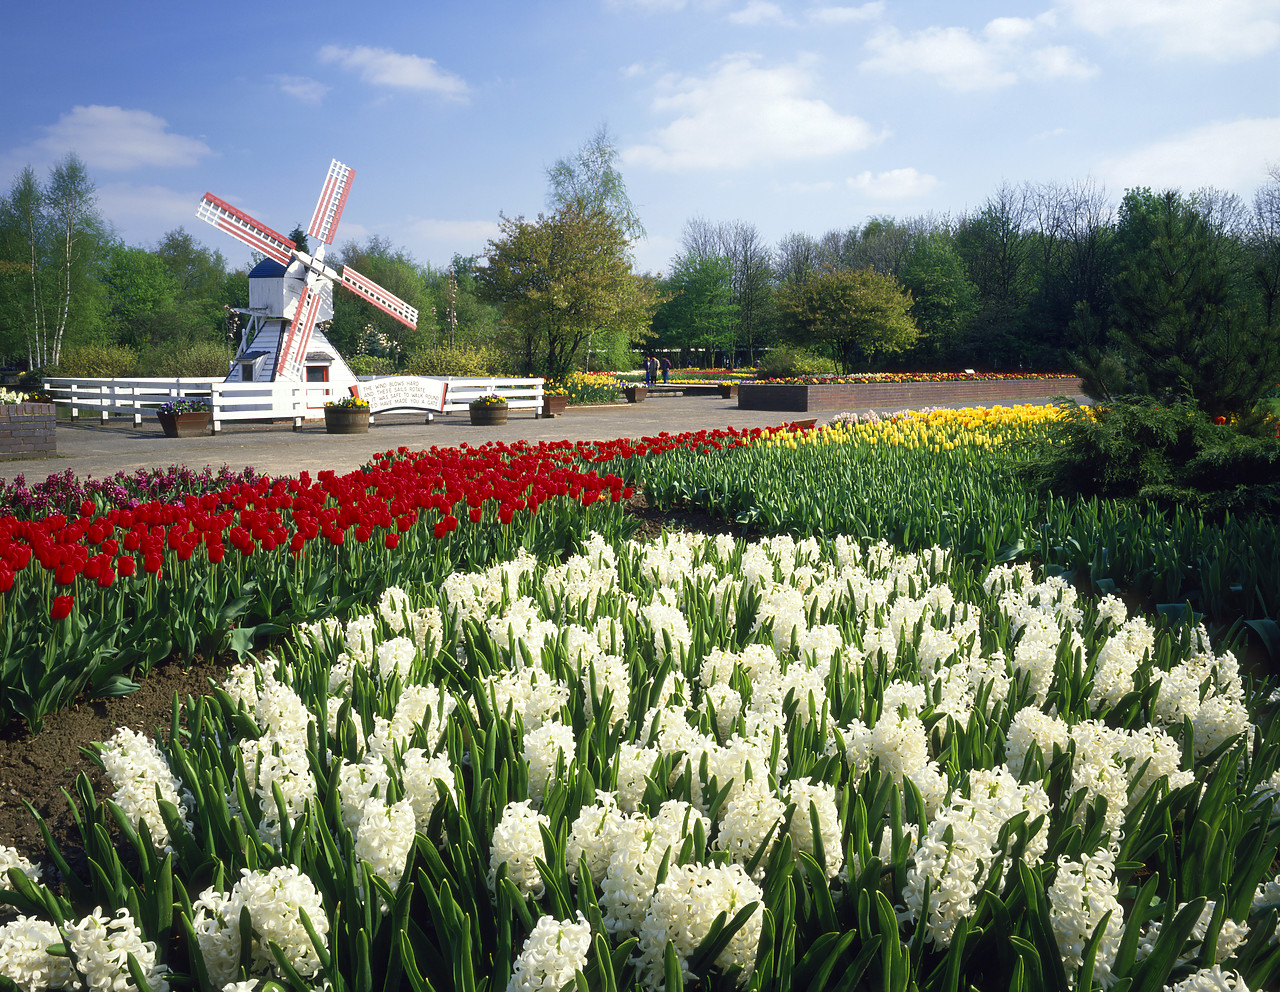 #881279-1 - Tulip Gardens & Windmill, Springfields Gardens, Spaulding, Lincolnshire, England